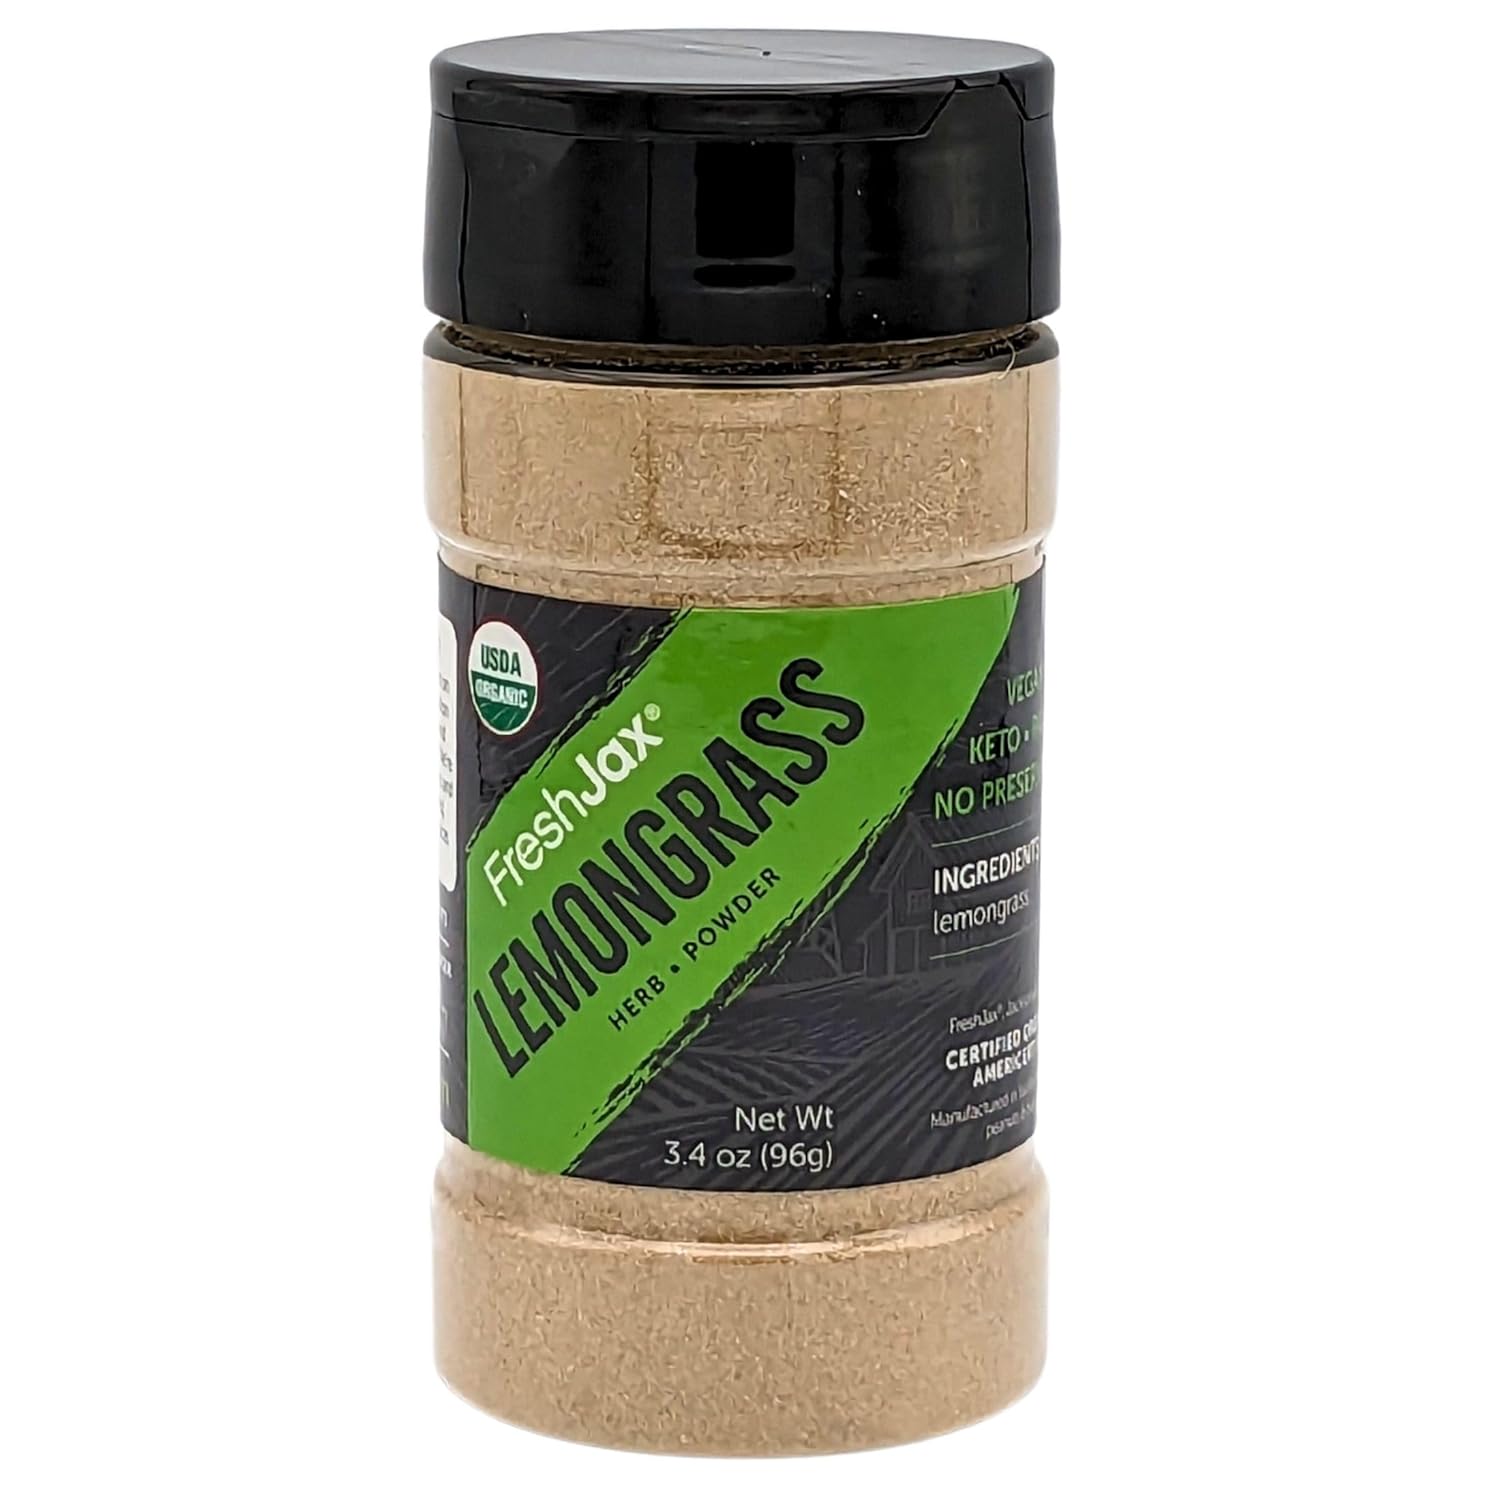 FreshJax Organic Lemongrass Powder for Cooking (3.4 oz Bottle) Certified Organic, Non GMO, Gluten Free, Keto, Paleo, No Preservatives Lemon grass herbs | Handcrafted in Jacksonville, Florida